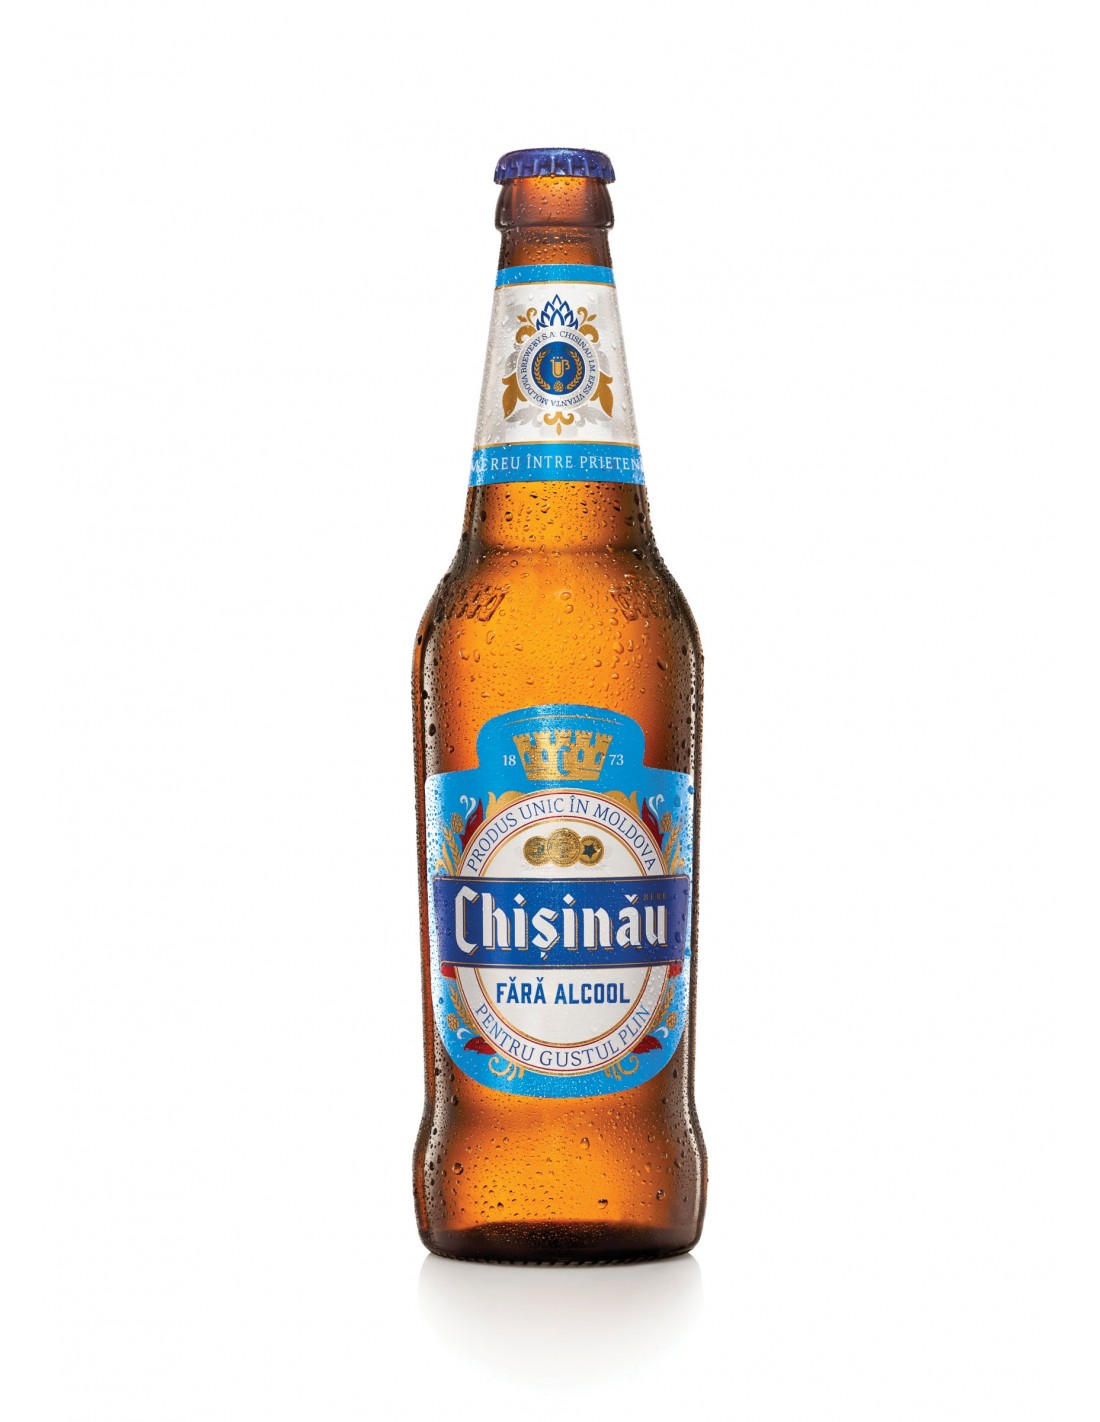 Bere blonda fara alcool Chisinau, 0% alc., 0.5L, Republica Moldova alcooldiscount.ro